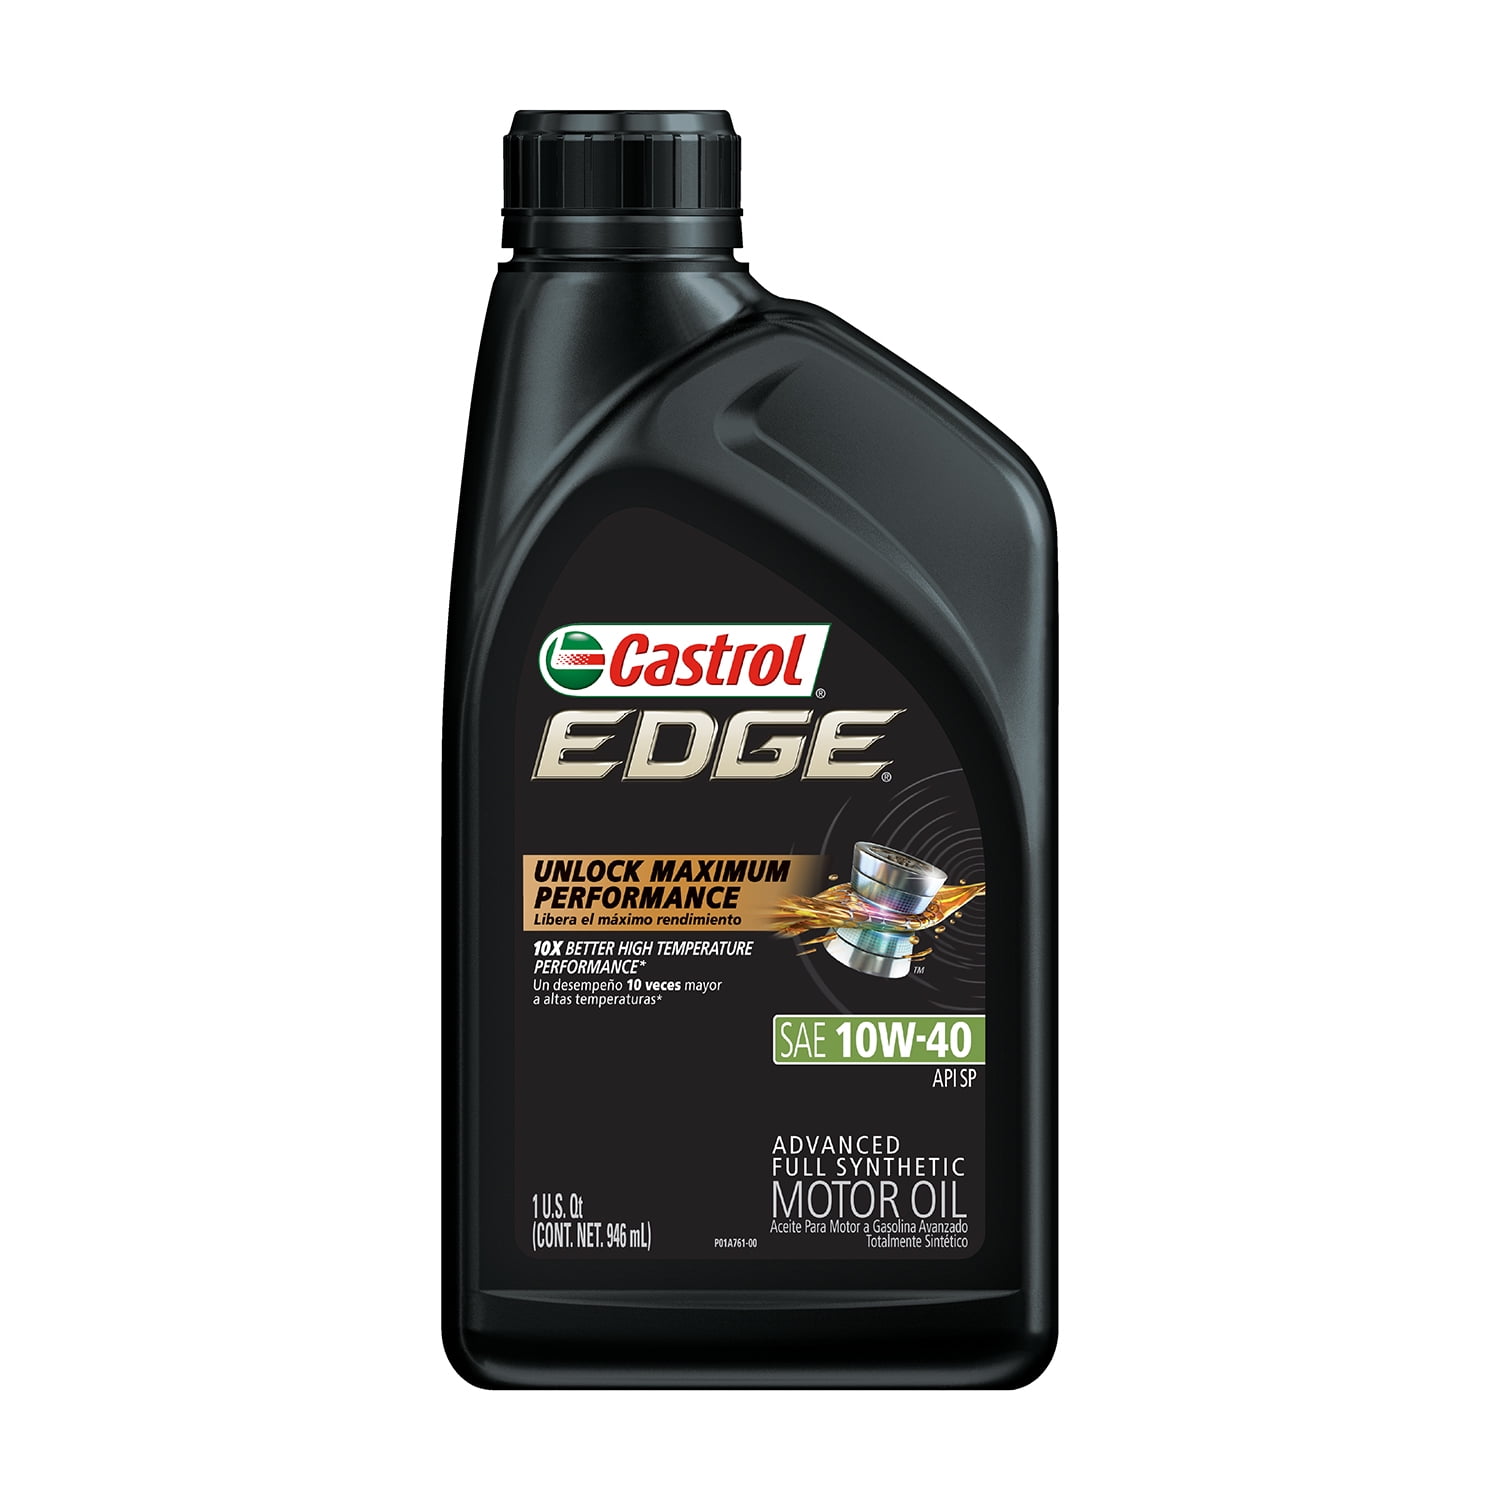 Step bathing catch Castrol Edge 10W-40 Advanced Full Synthetic Motor Oil, 1 Quart - Walmart.com